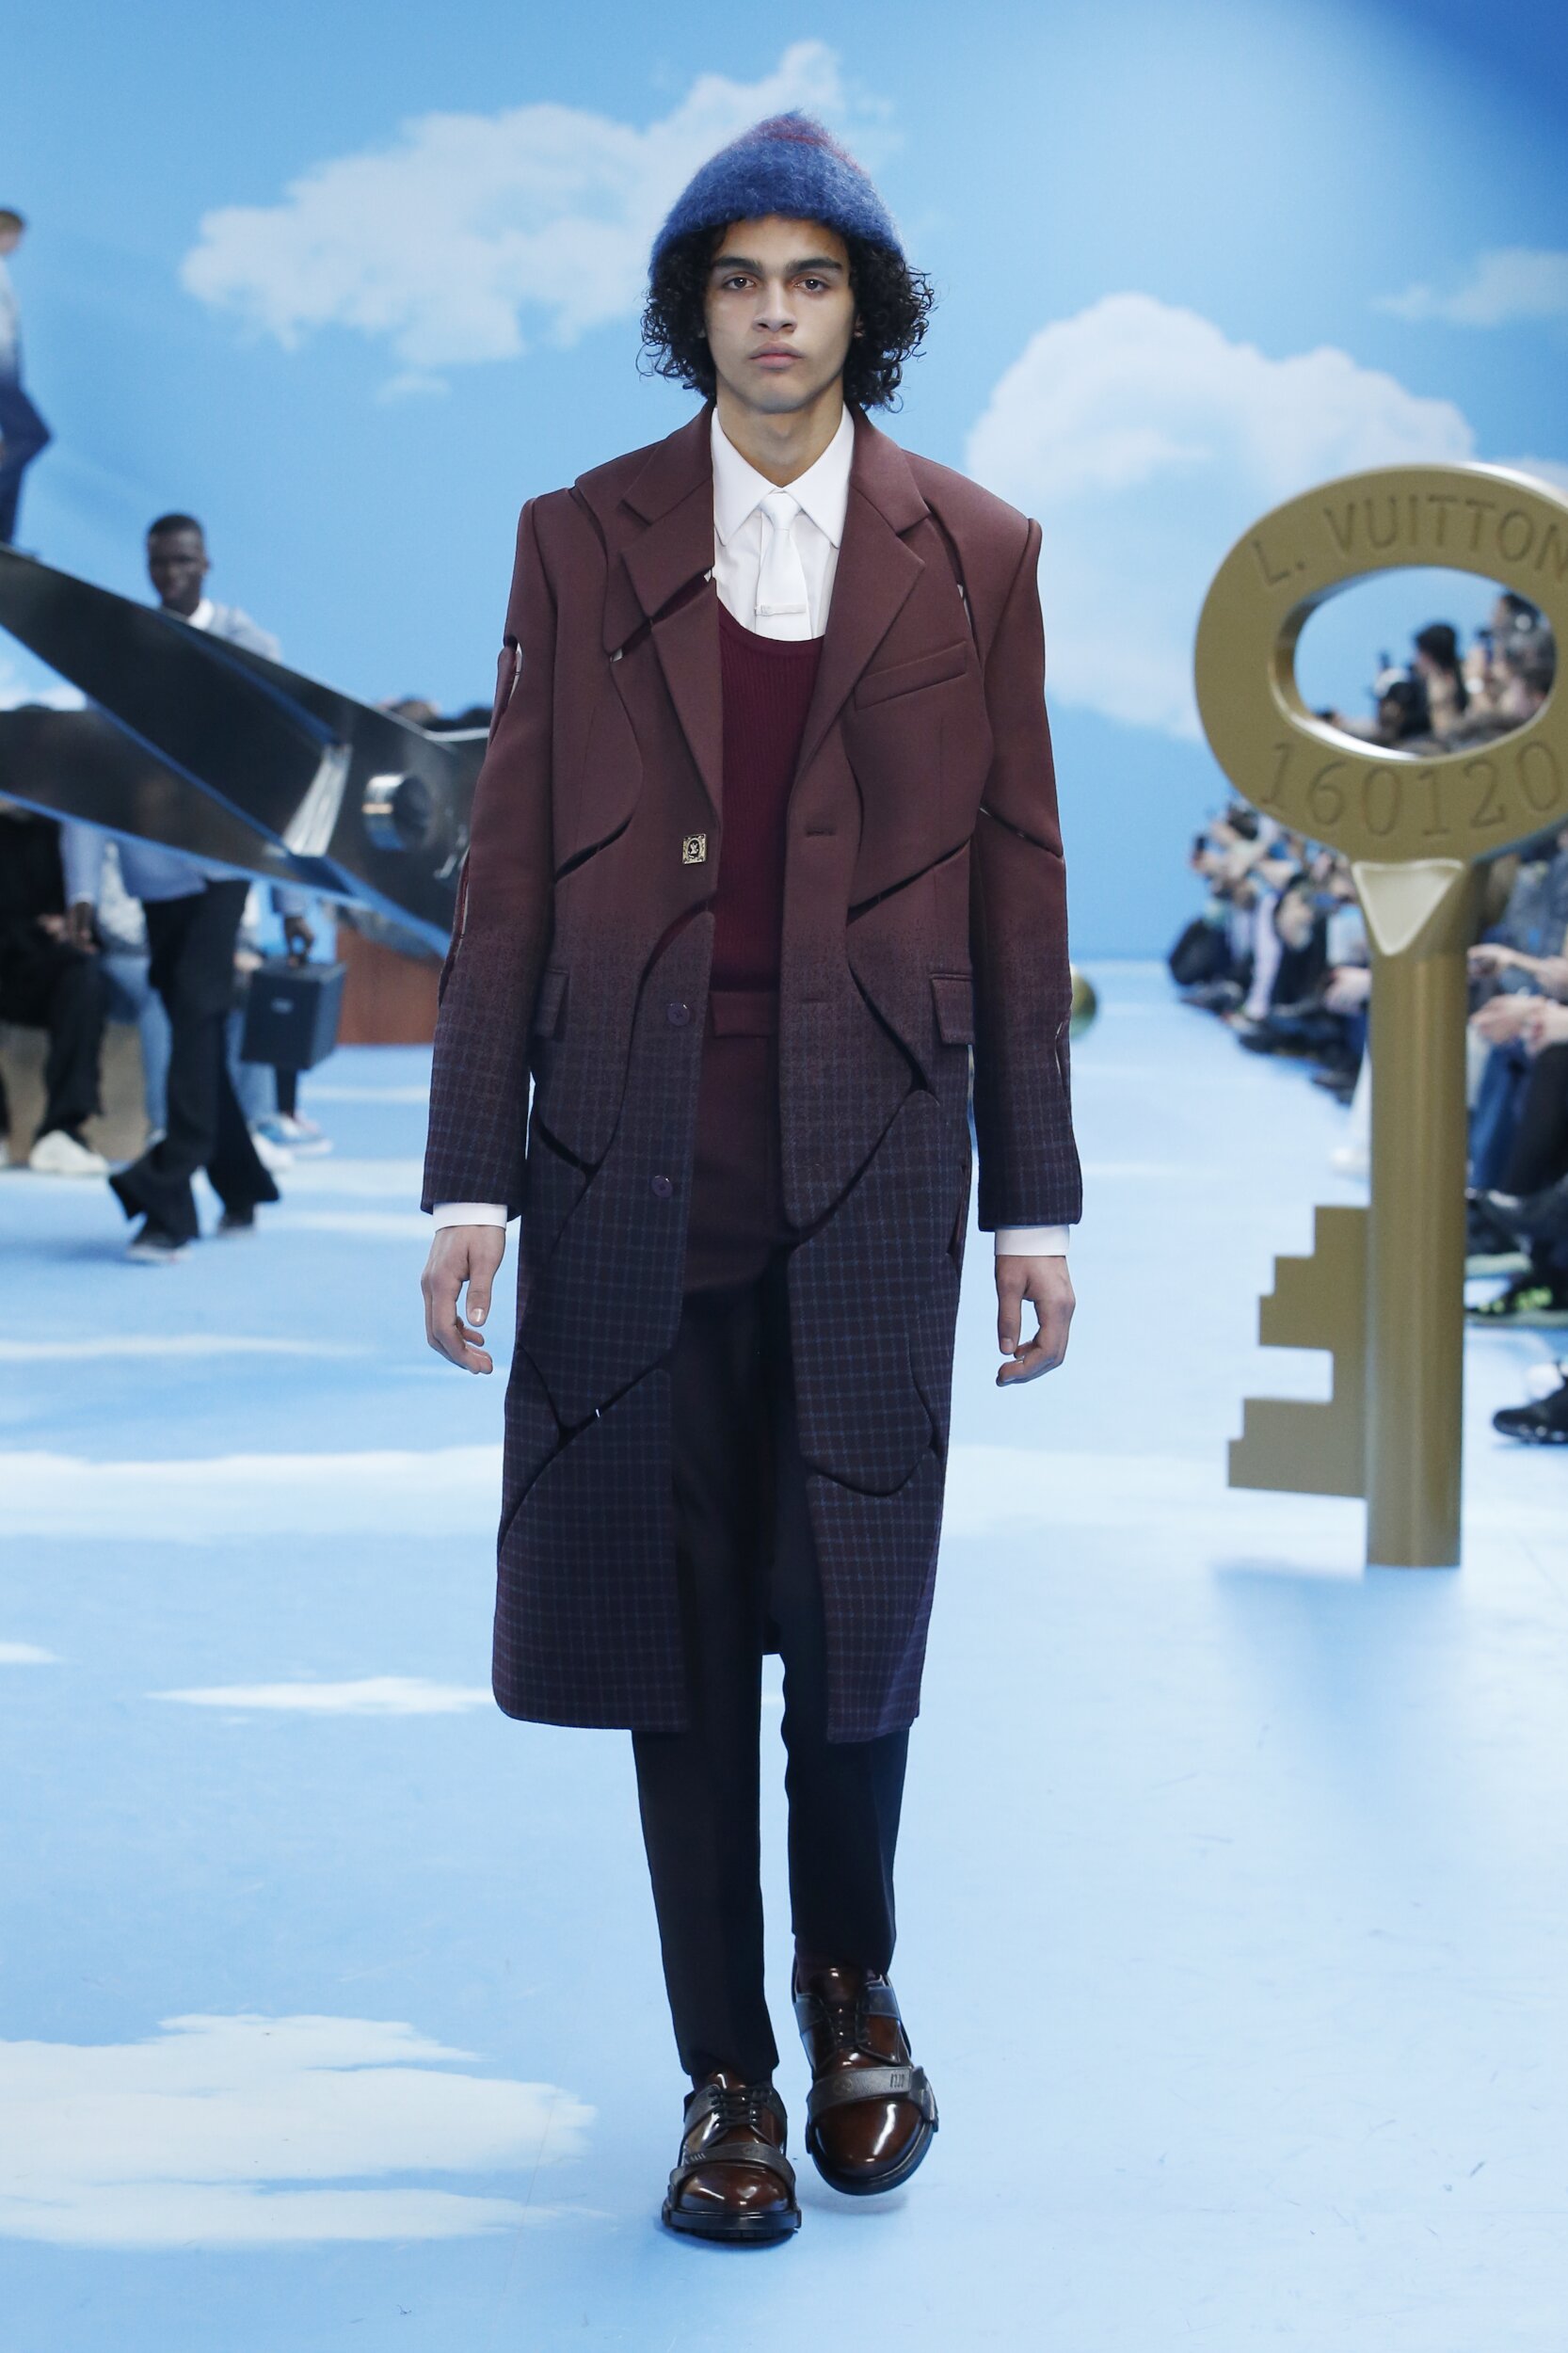 6 takeaways from the Louis Vuitton Men's Fall/Winter 2020-2021 show